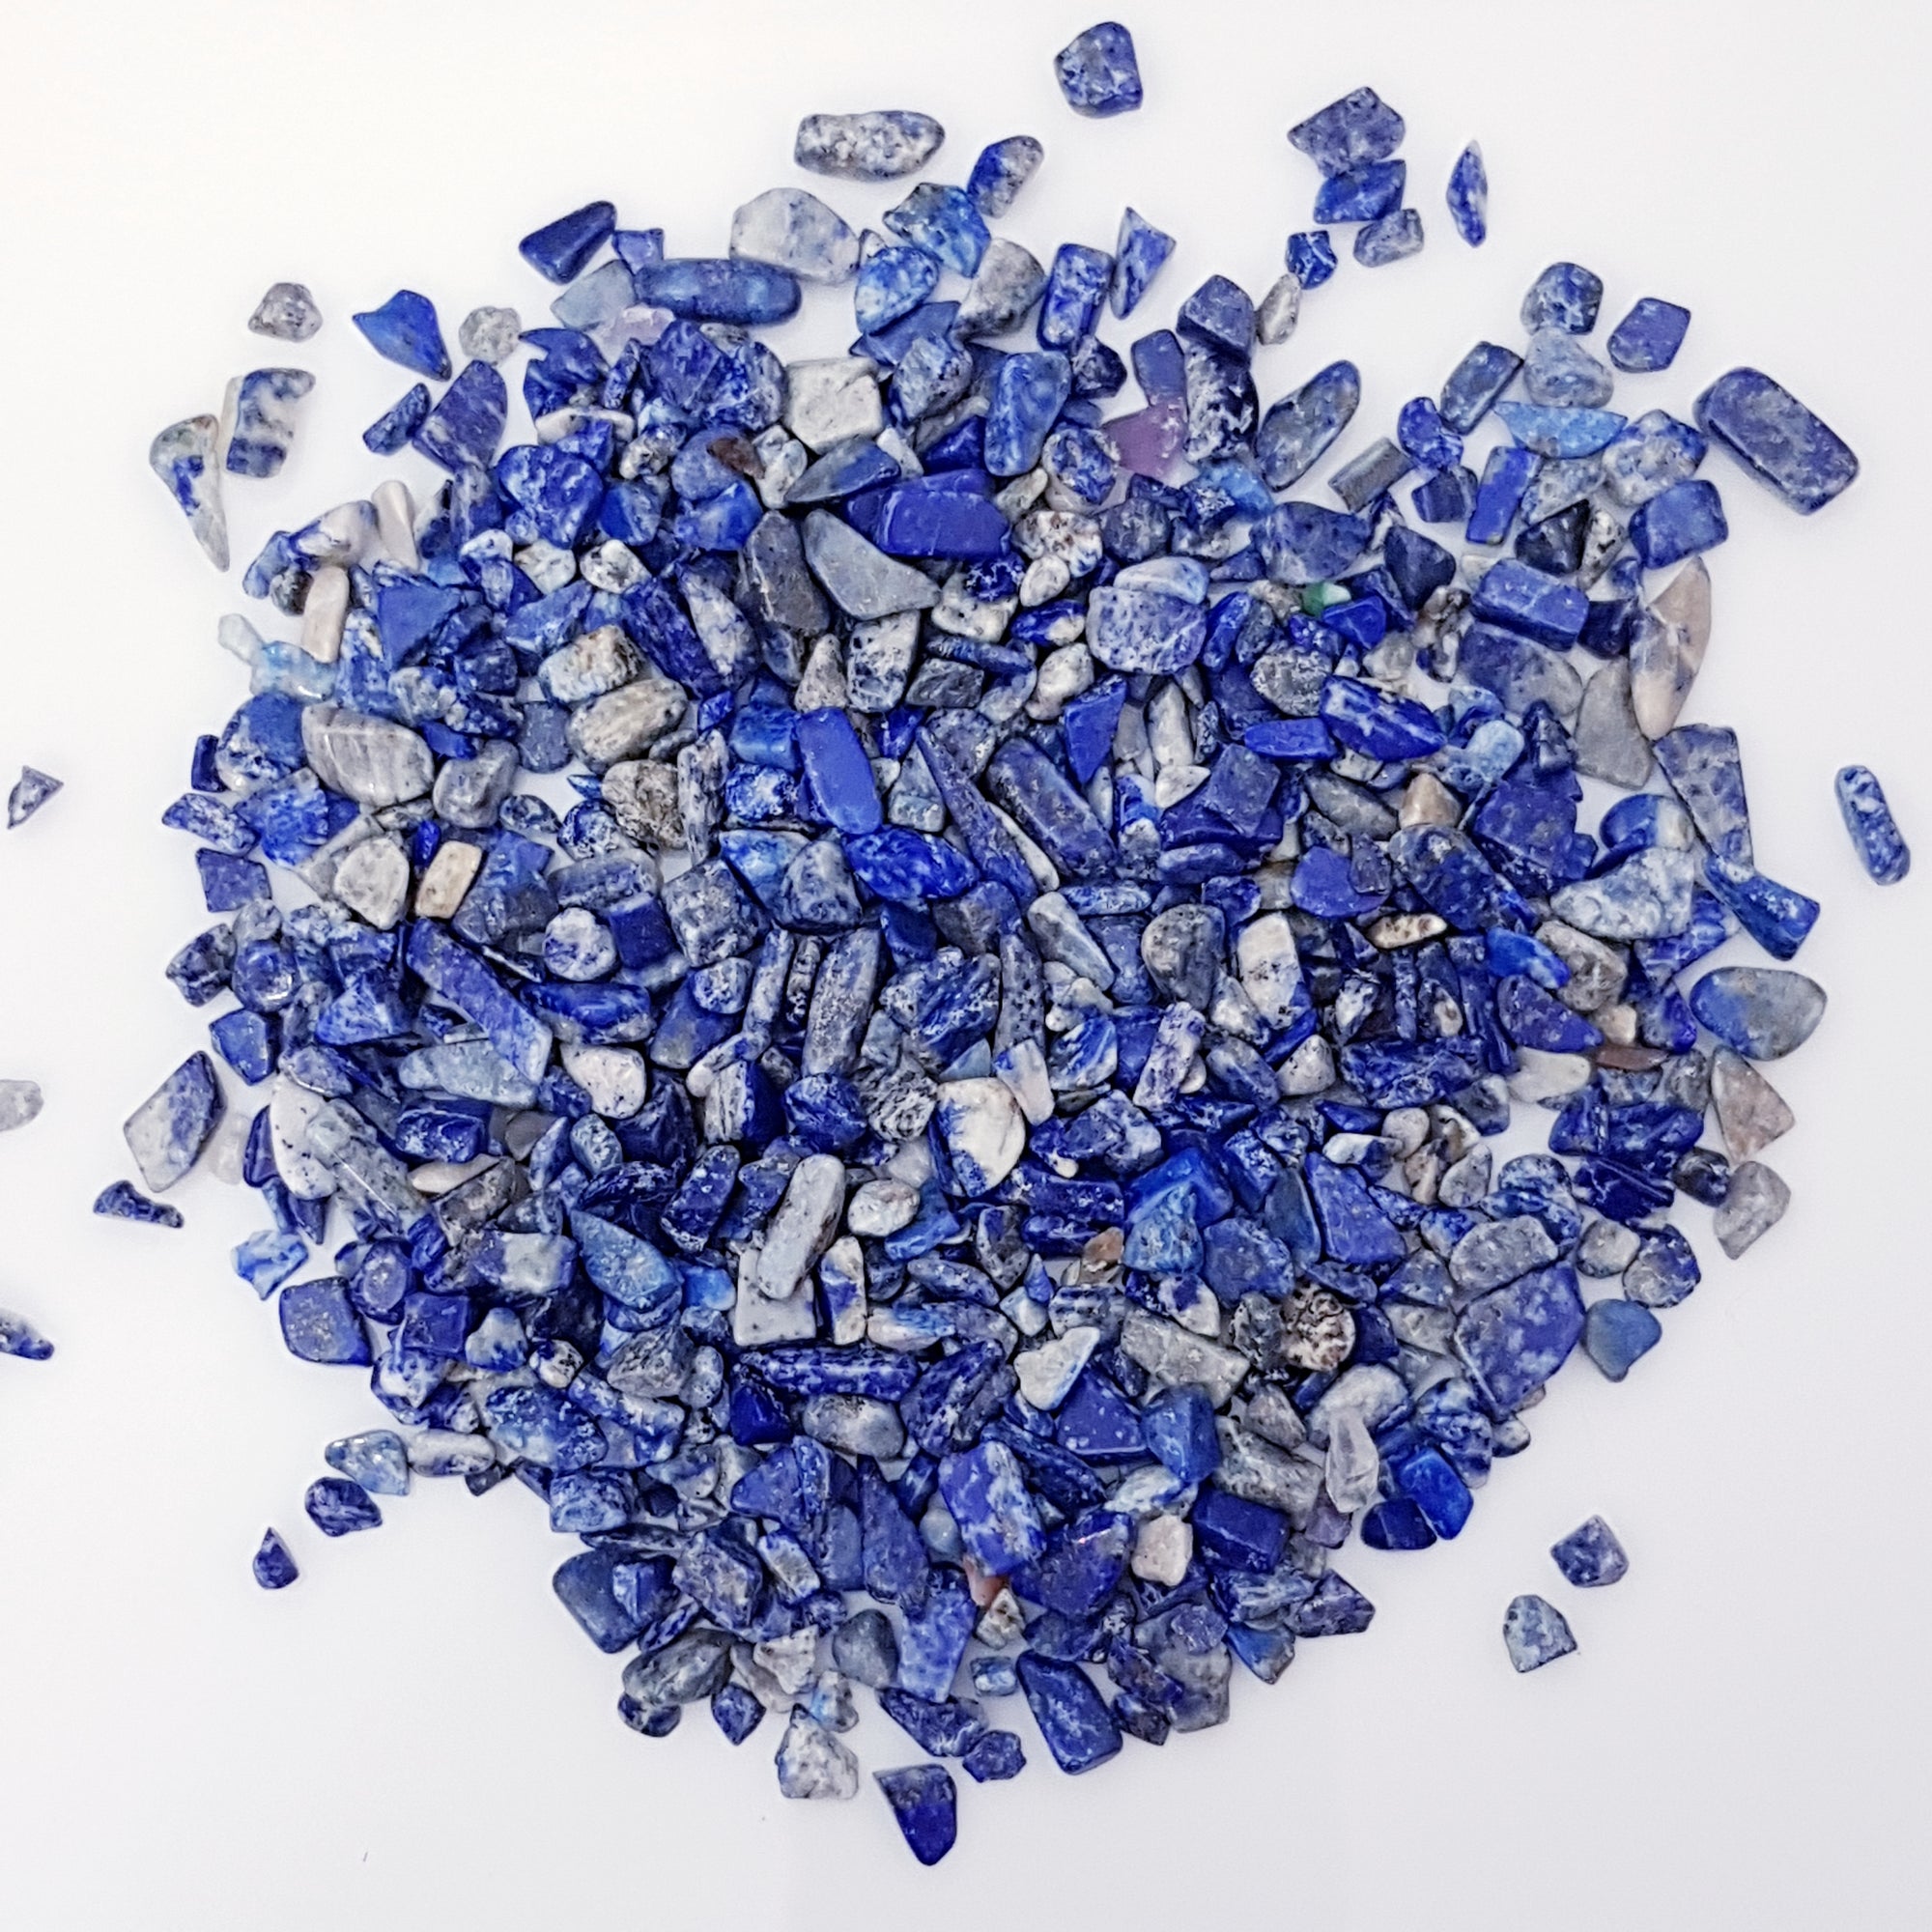 Lapiz lazuli crystal chips 100g